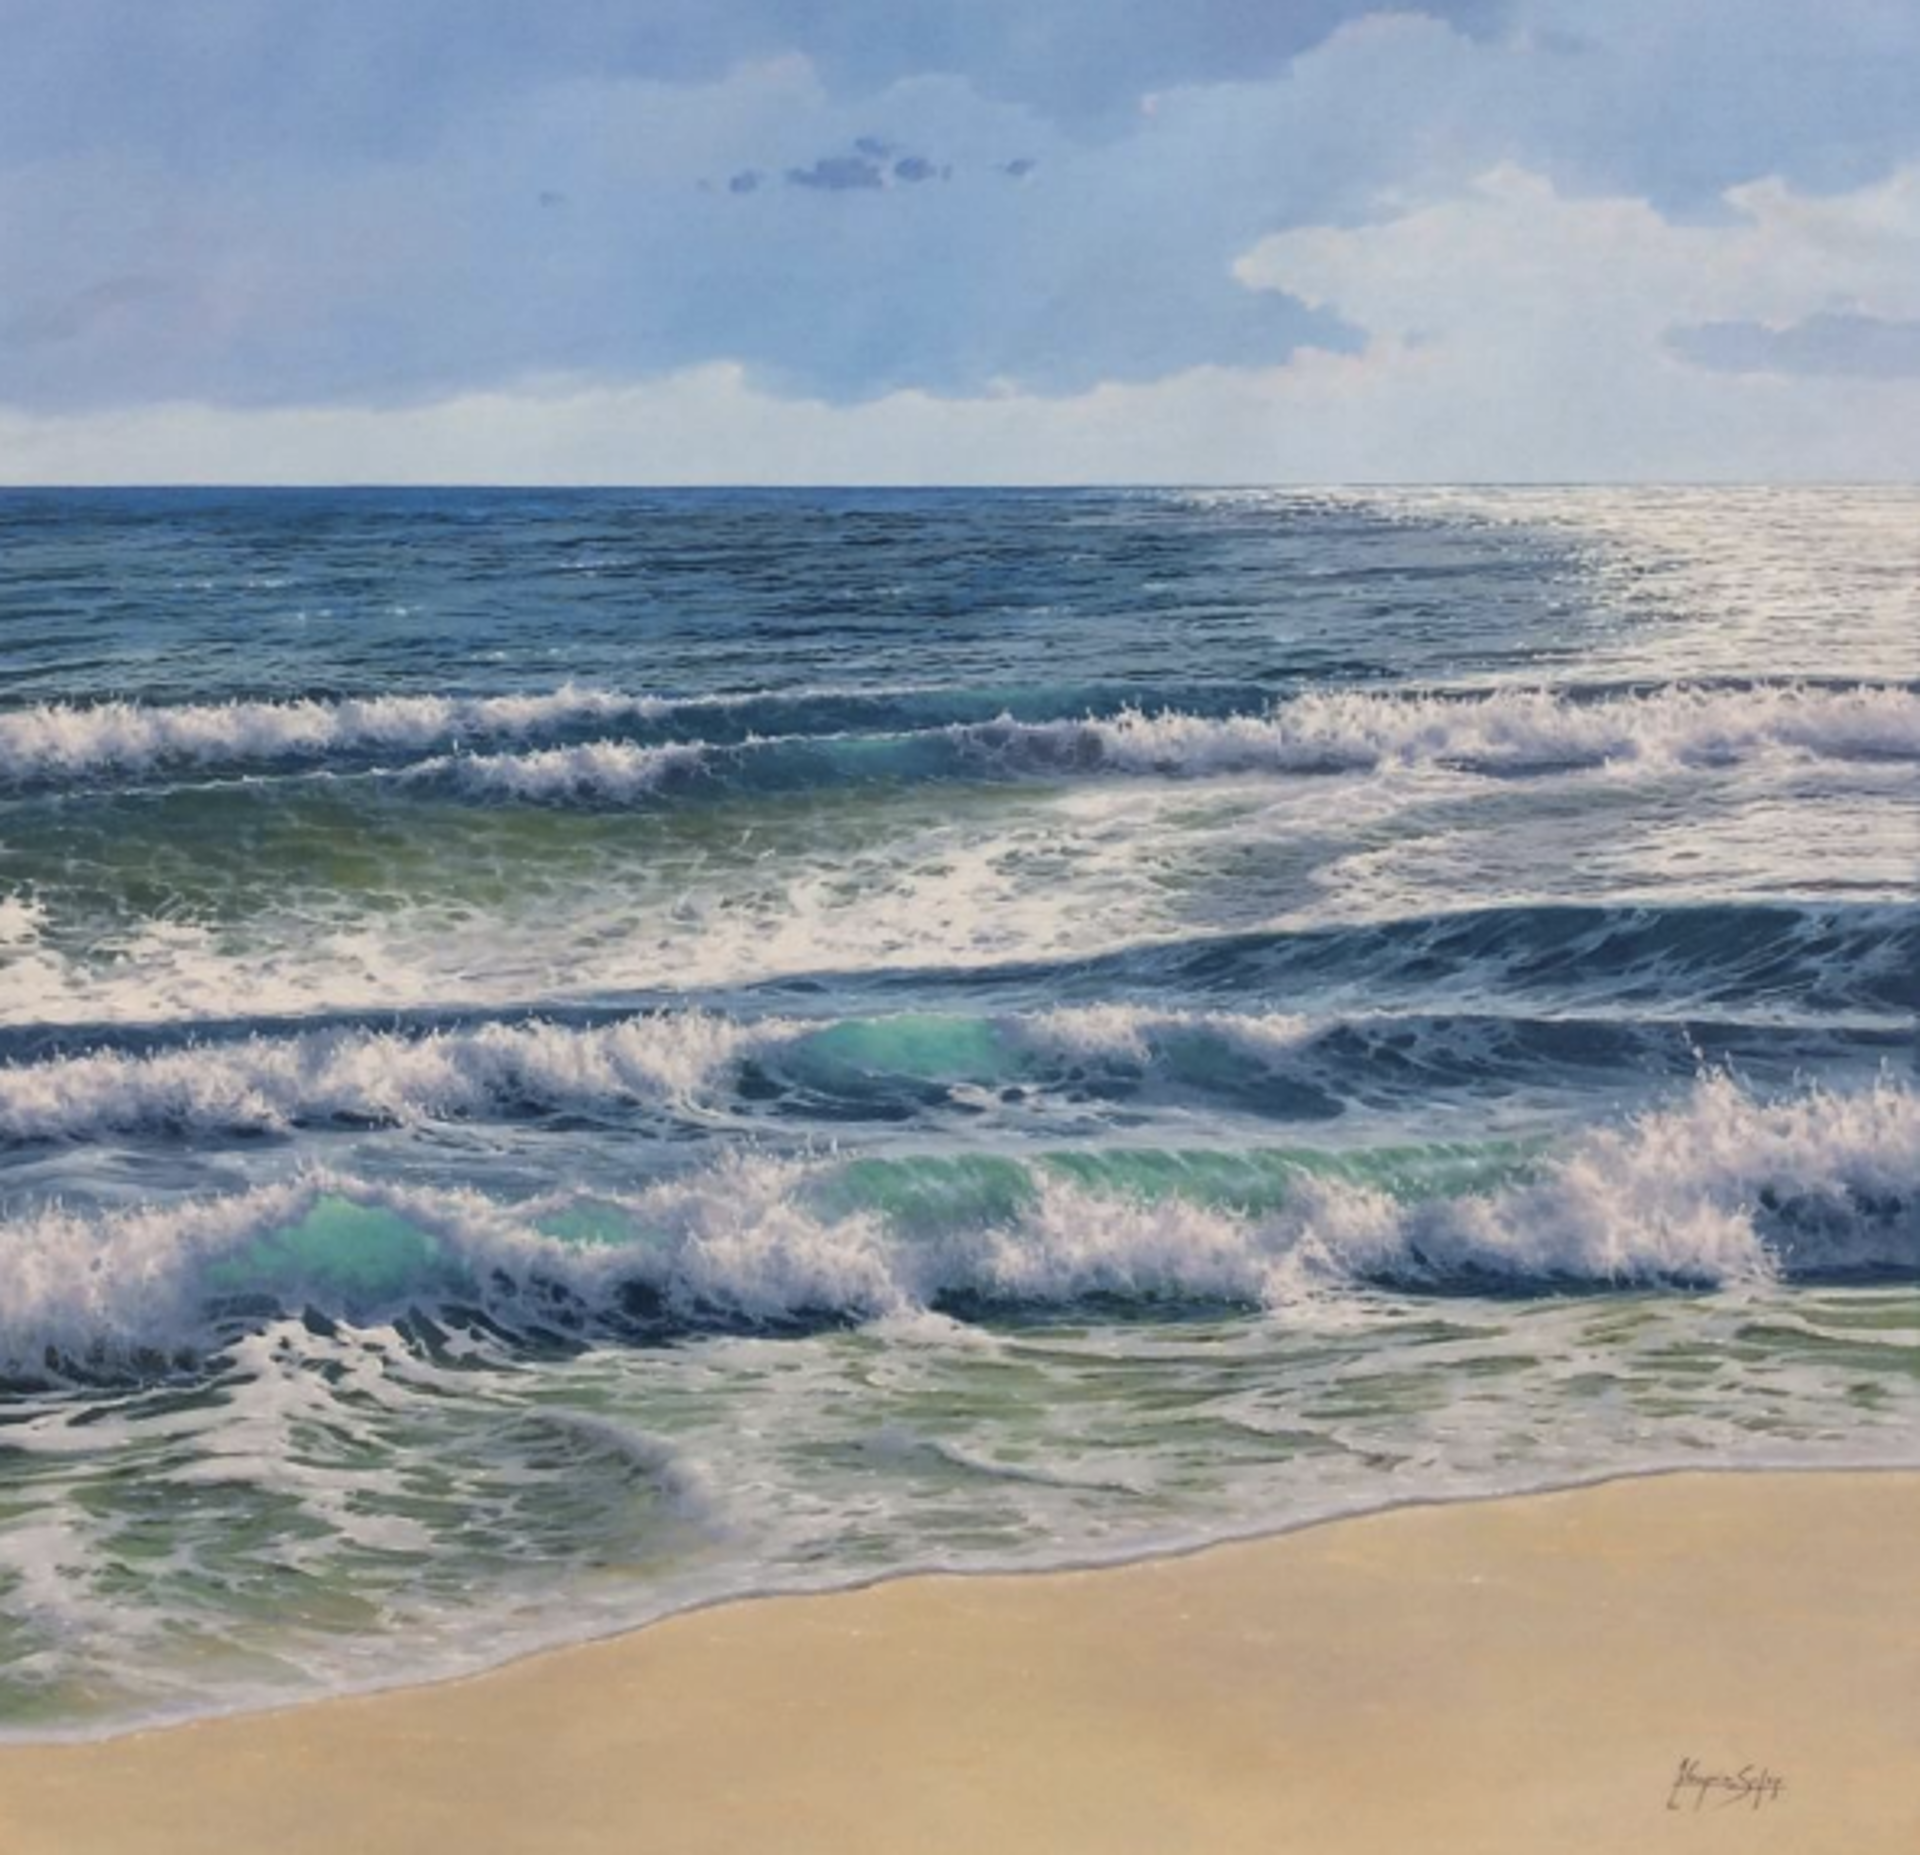 "Waves Meet The Shore" by Antonio Soler